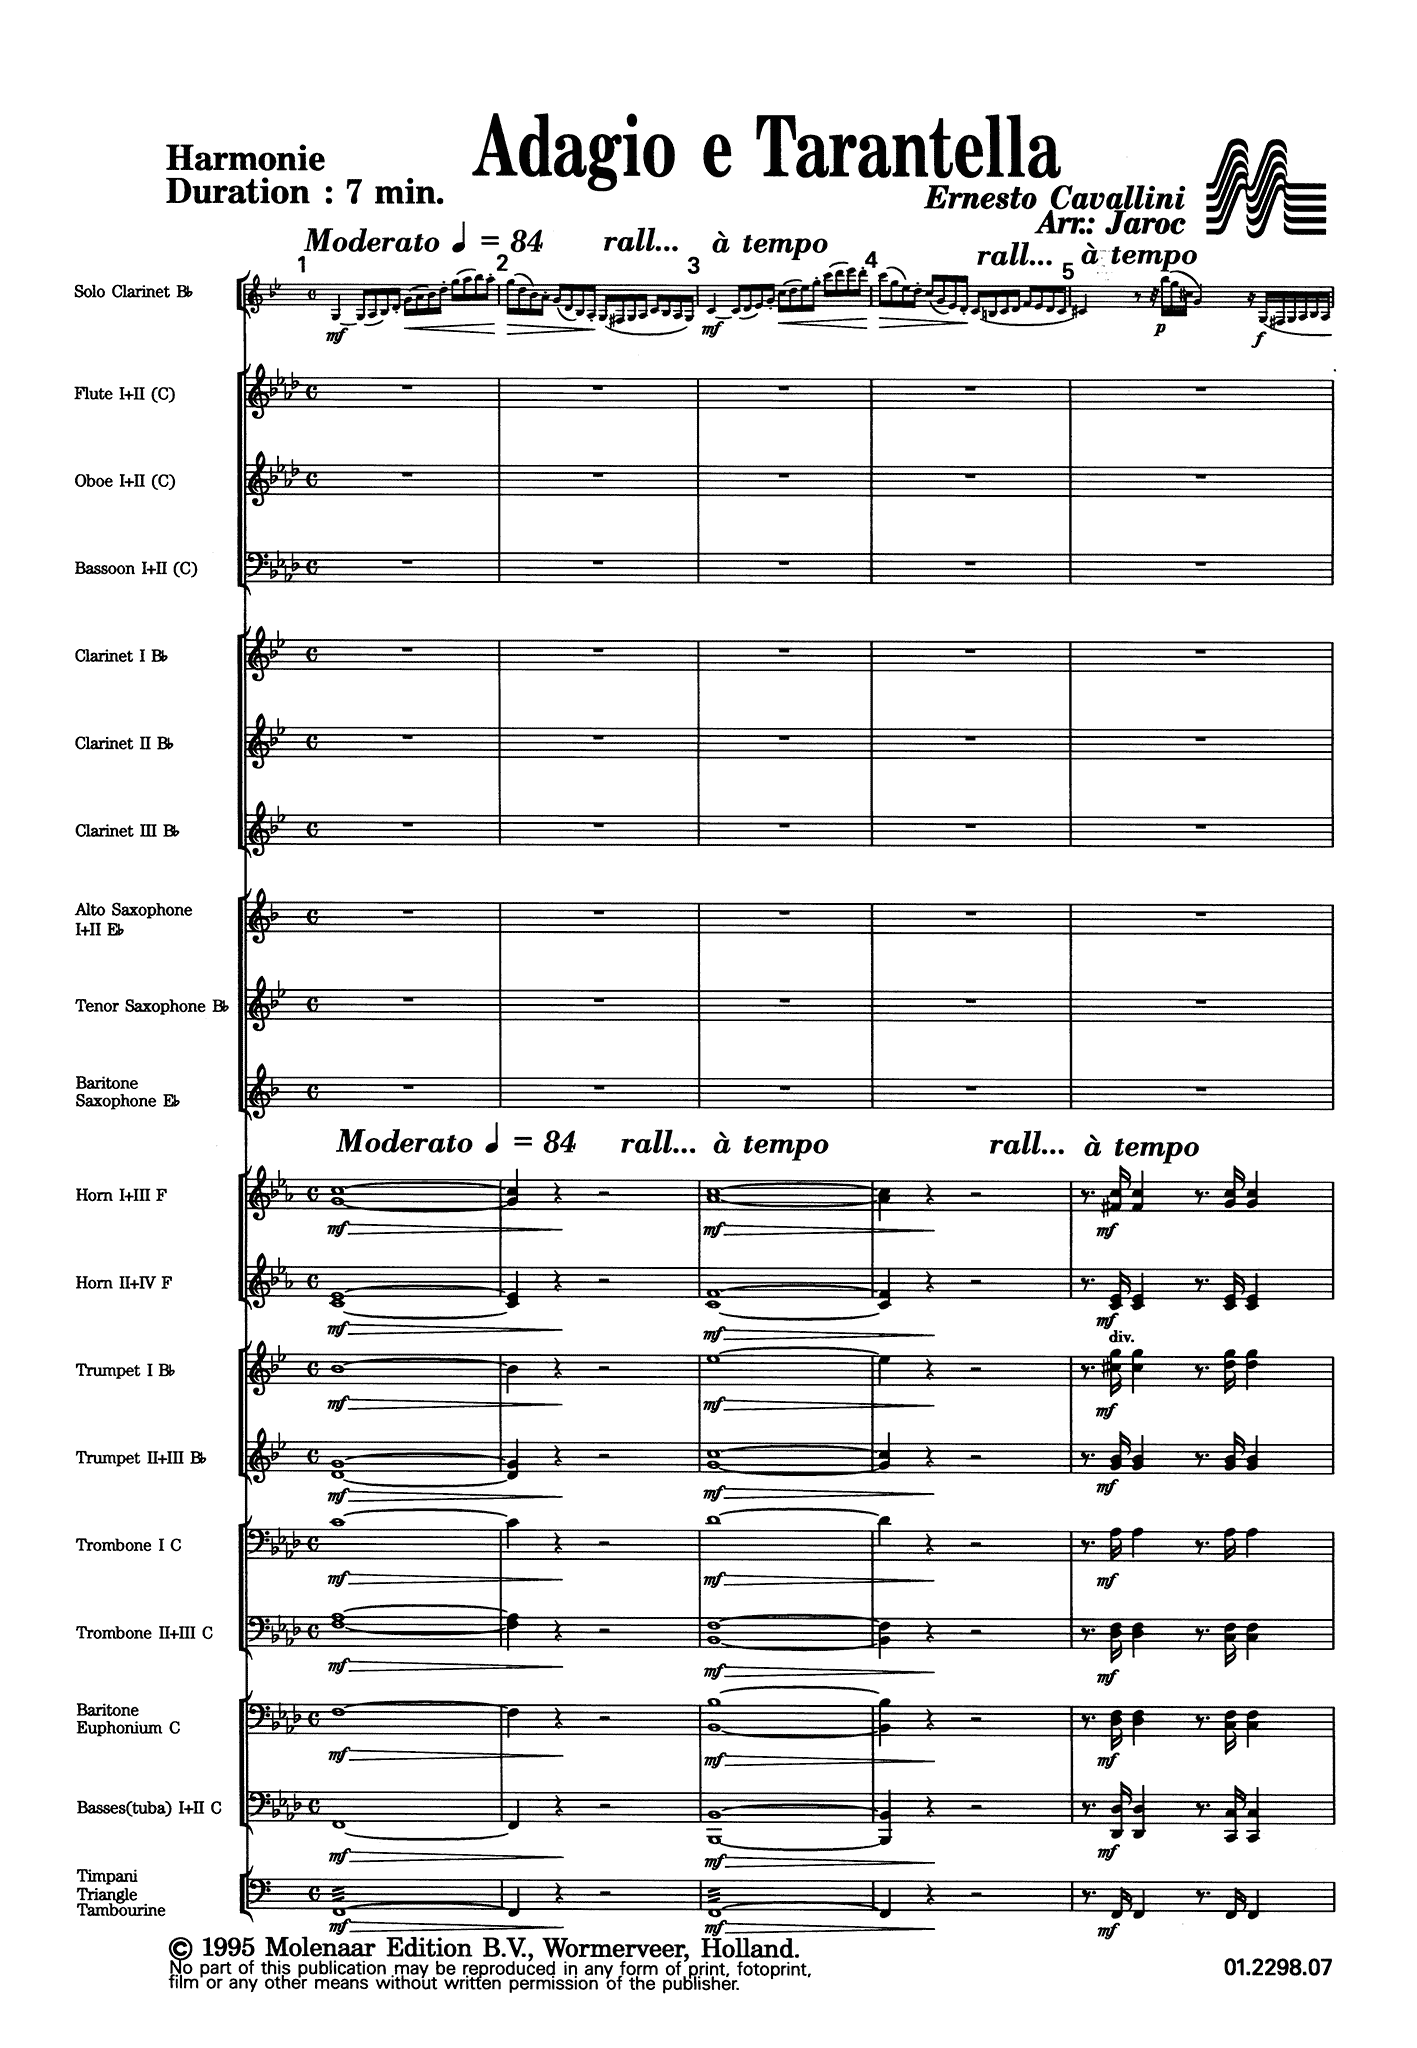 Adagio e Tarantella wind ensemble Score